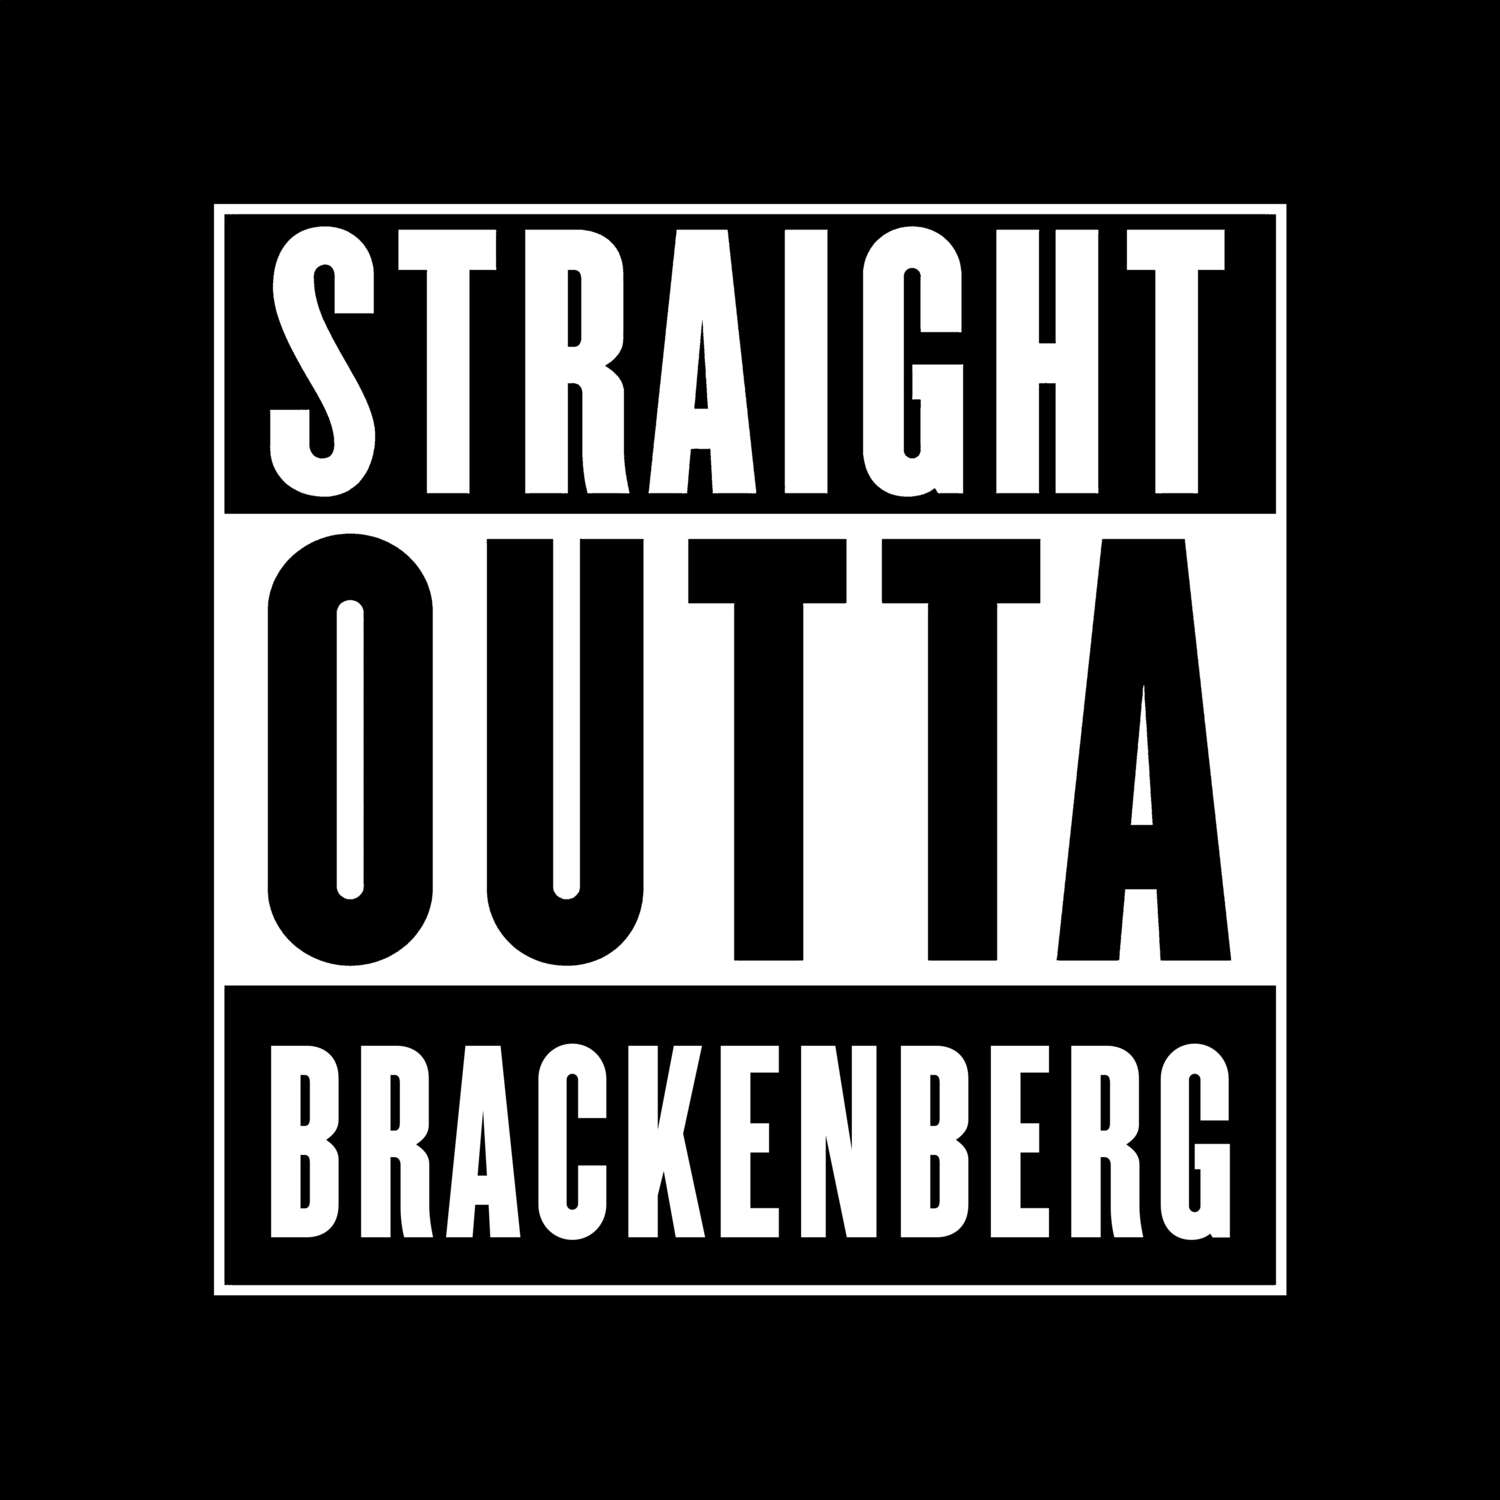 Brackenberg T-Shirt »Straight Outta«